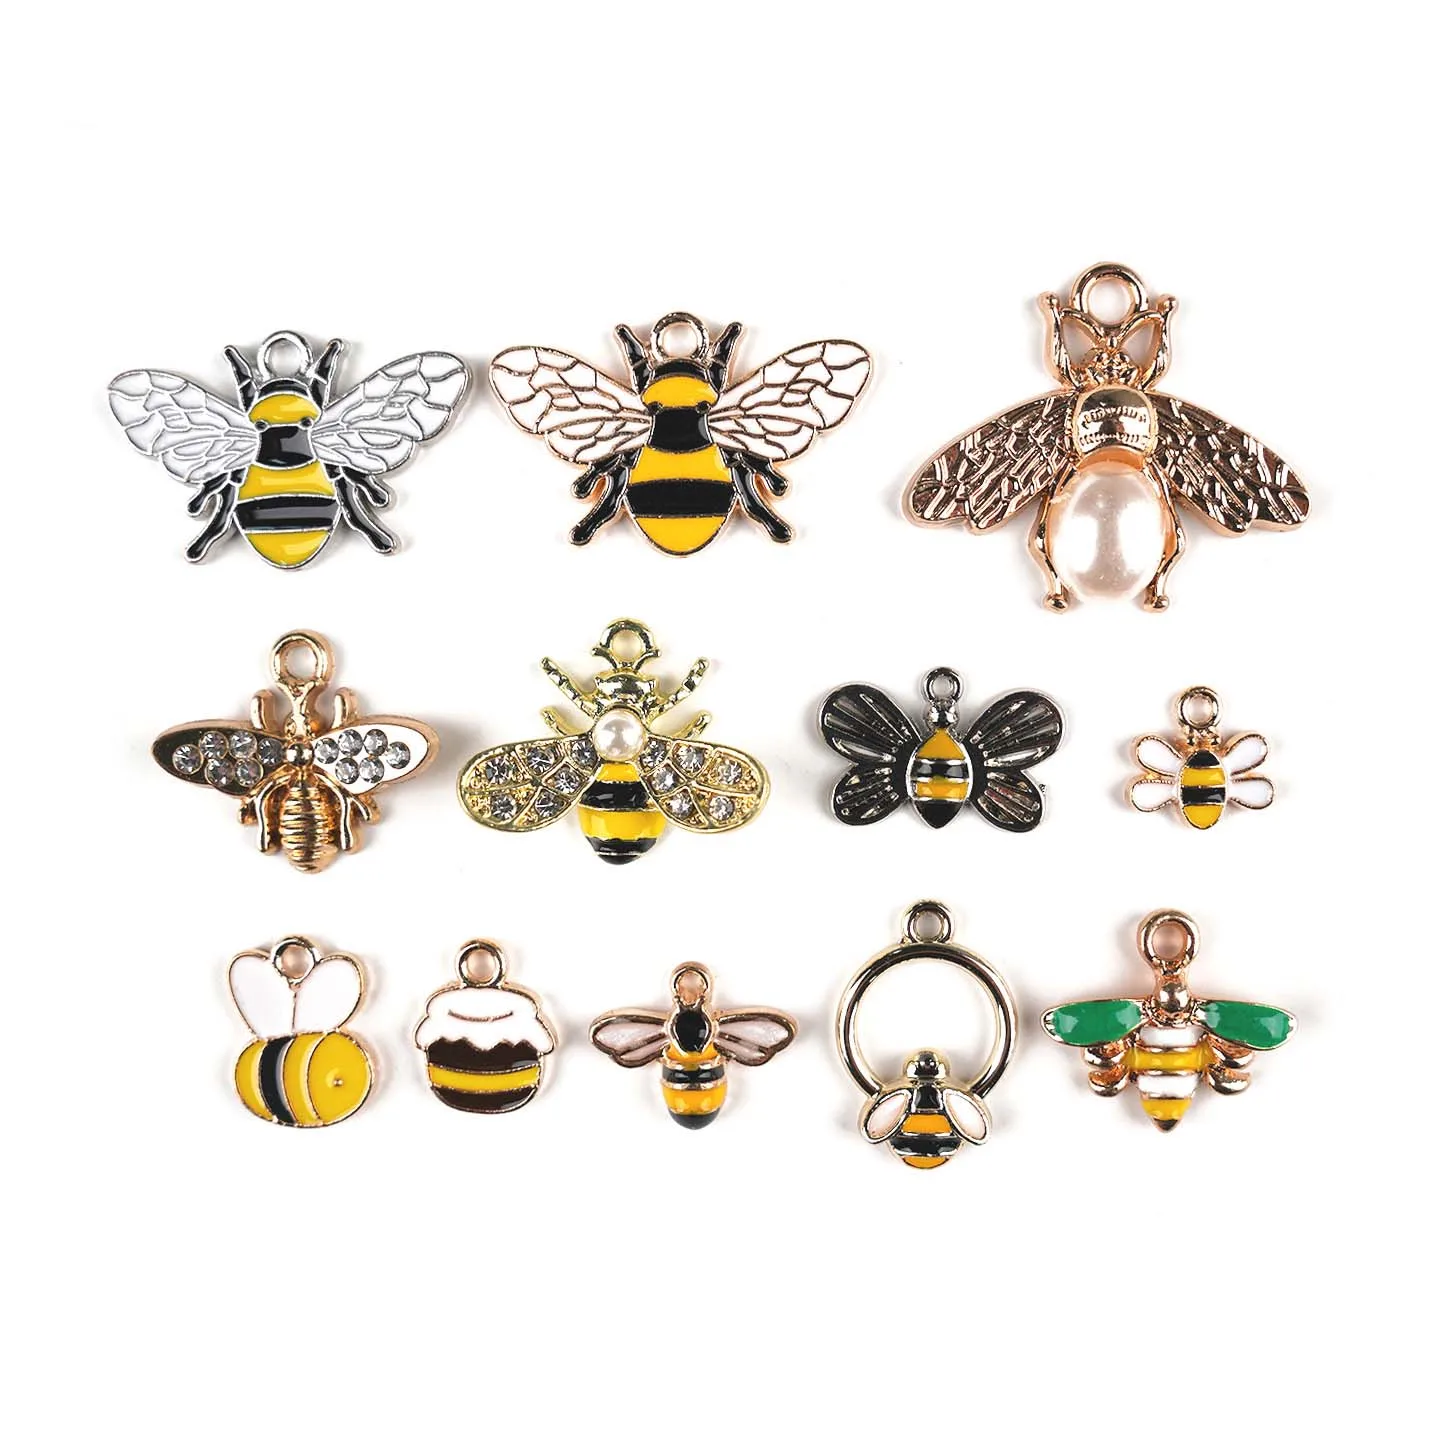 

10pcs/Set Enamel Honey Jar Bee Shaped Charms Pendants for DIY Necklace Bracelet Earrings Jewelry Making Handmade